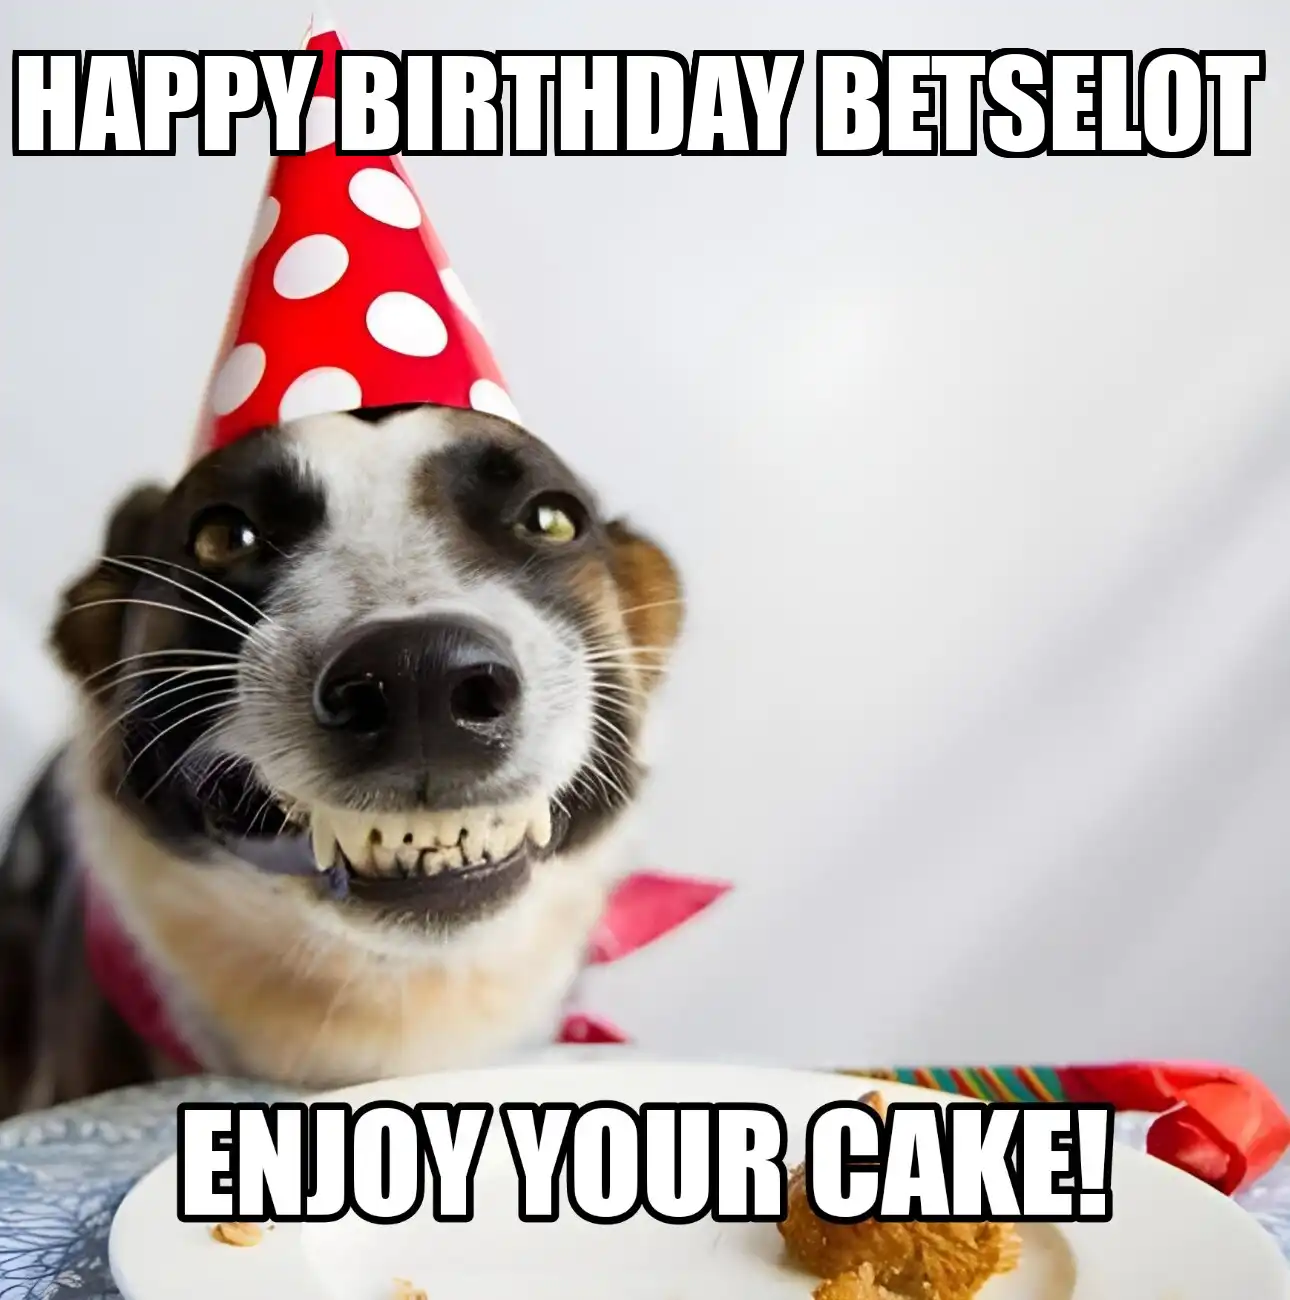 Happy Birthday Betselot Enjoy Your Cake Dog Meme